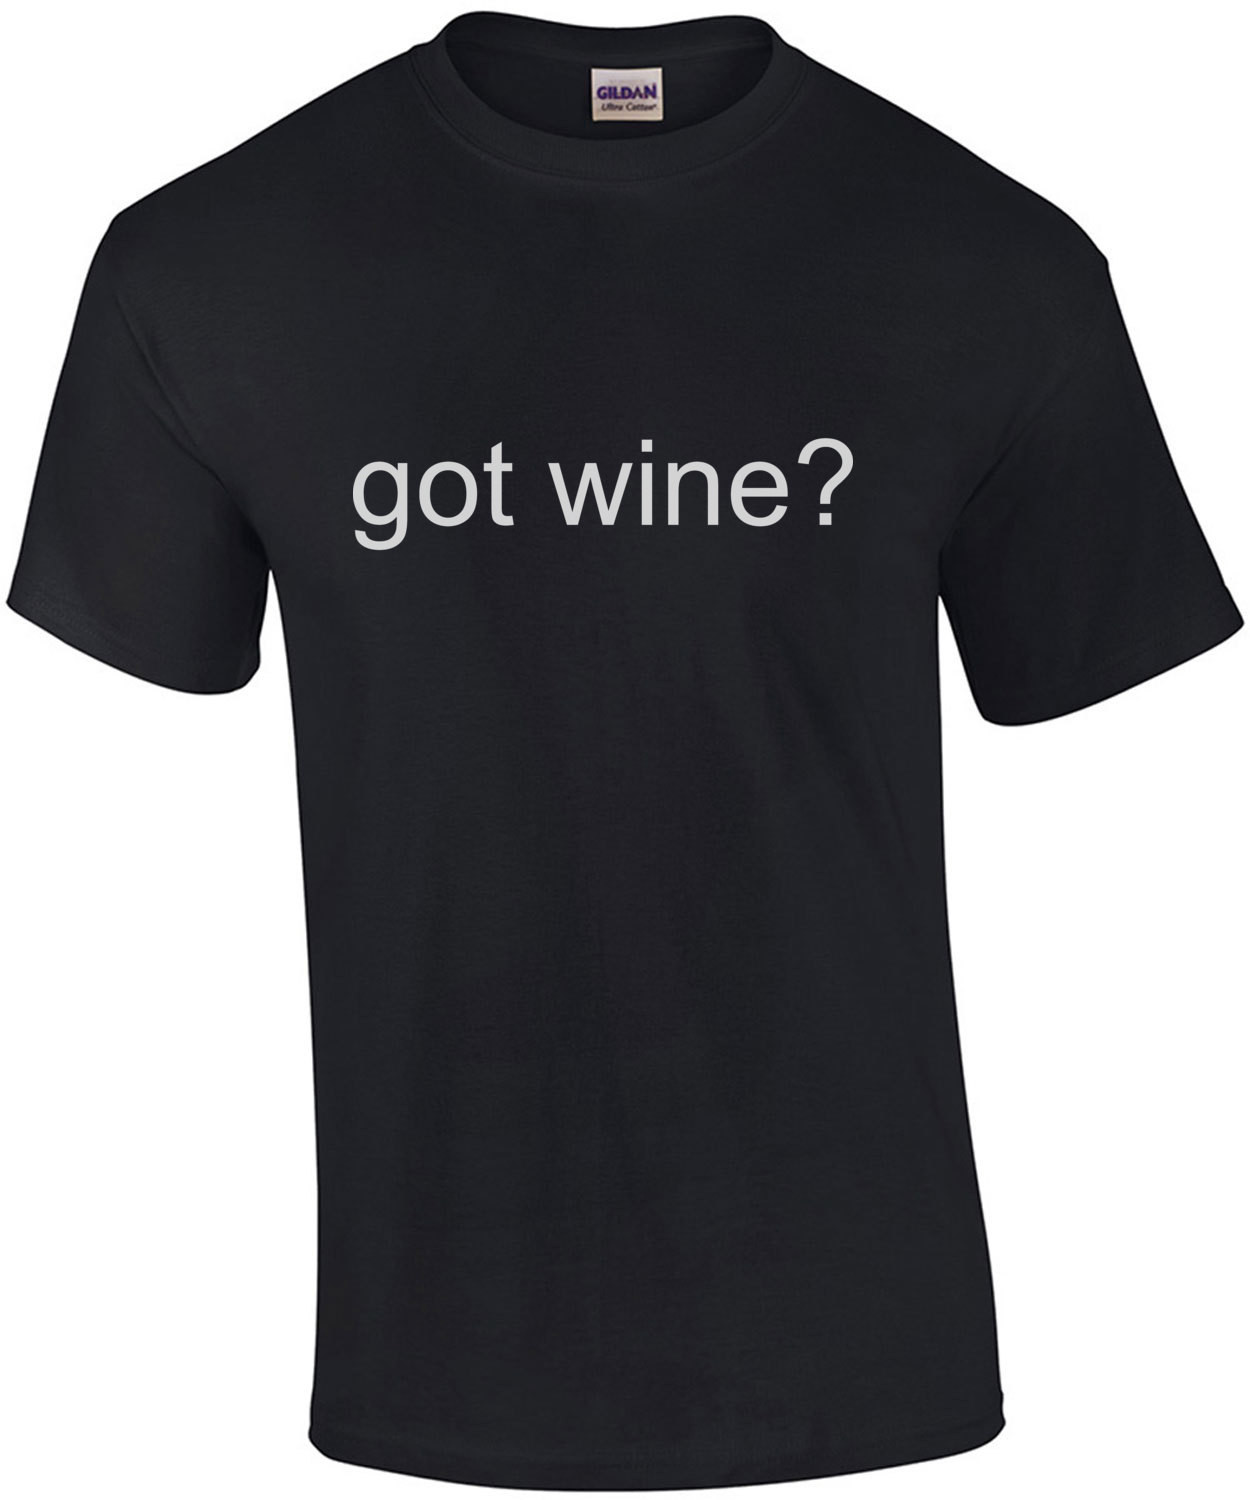 Got wine?